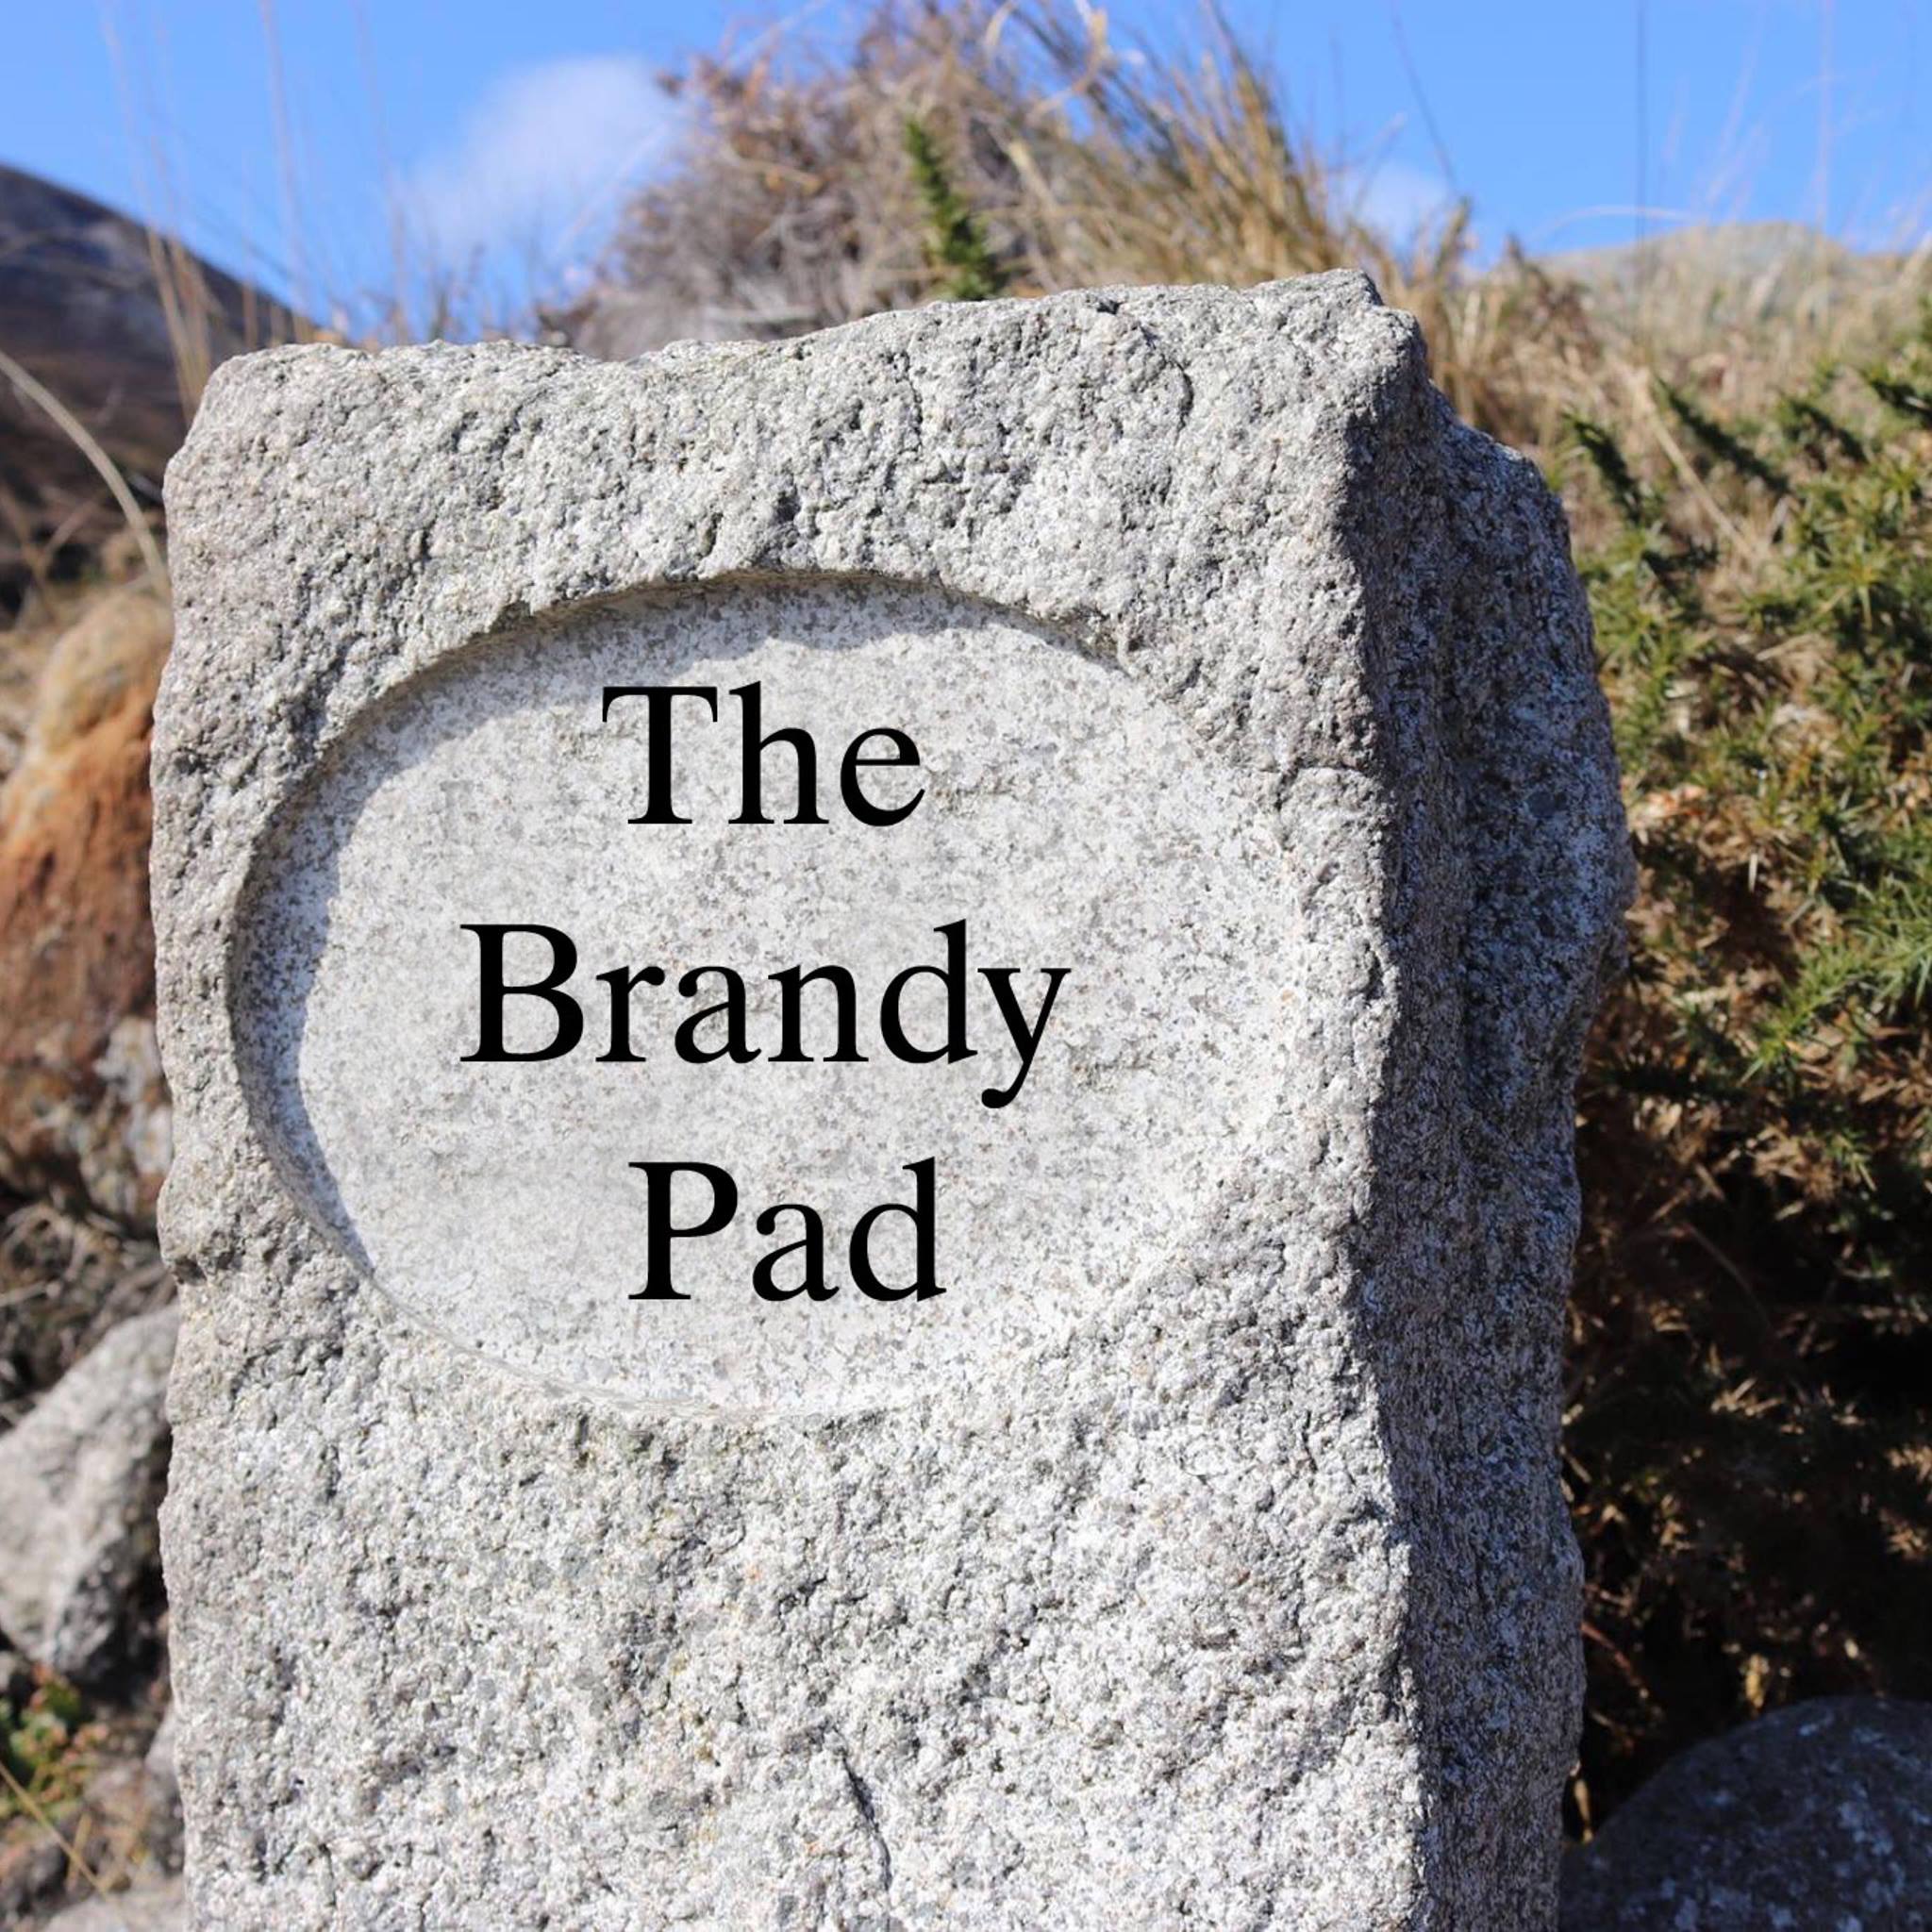 The Brandy Pad